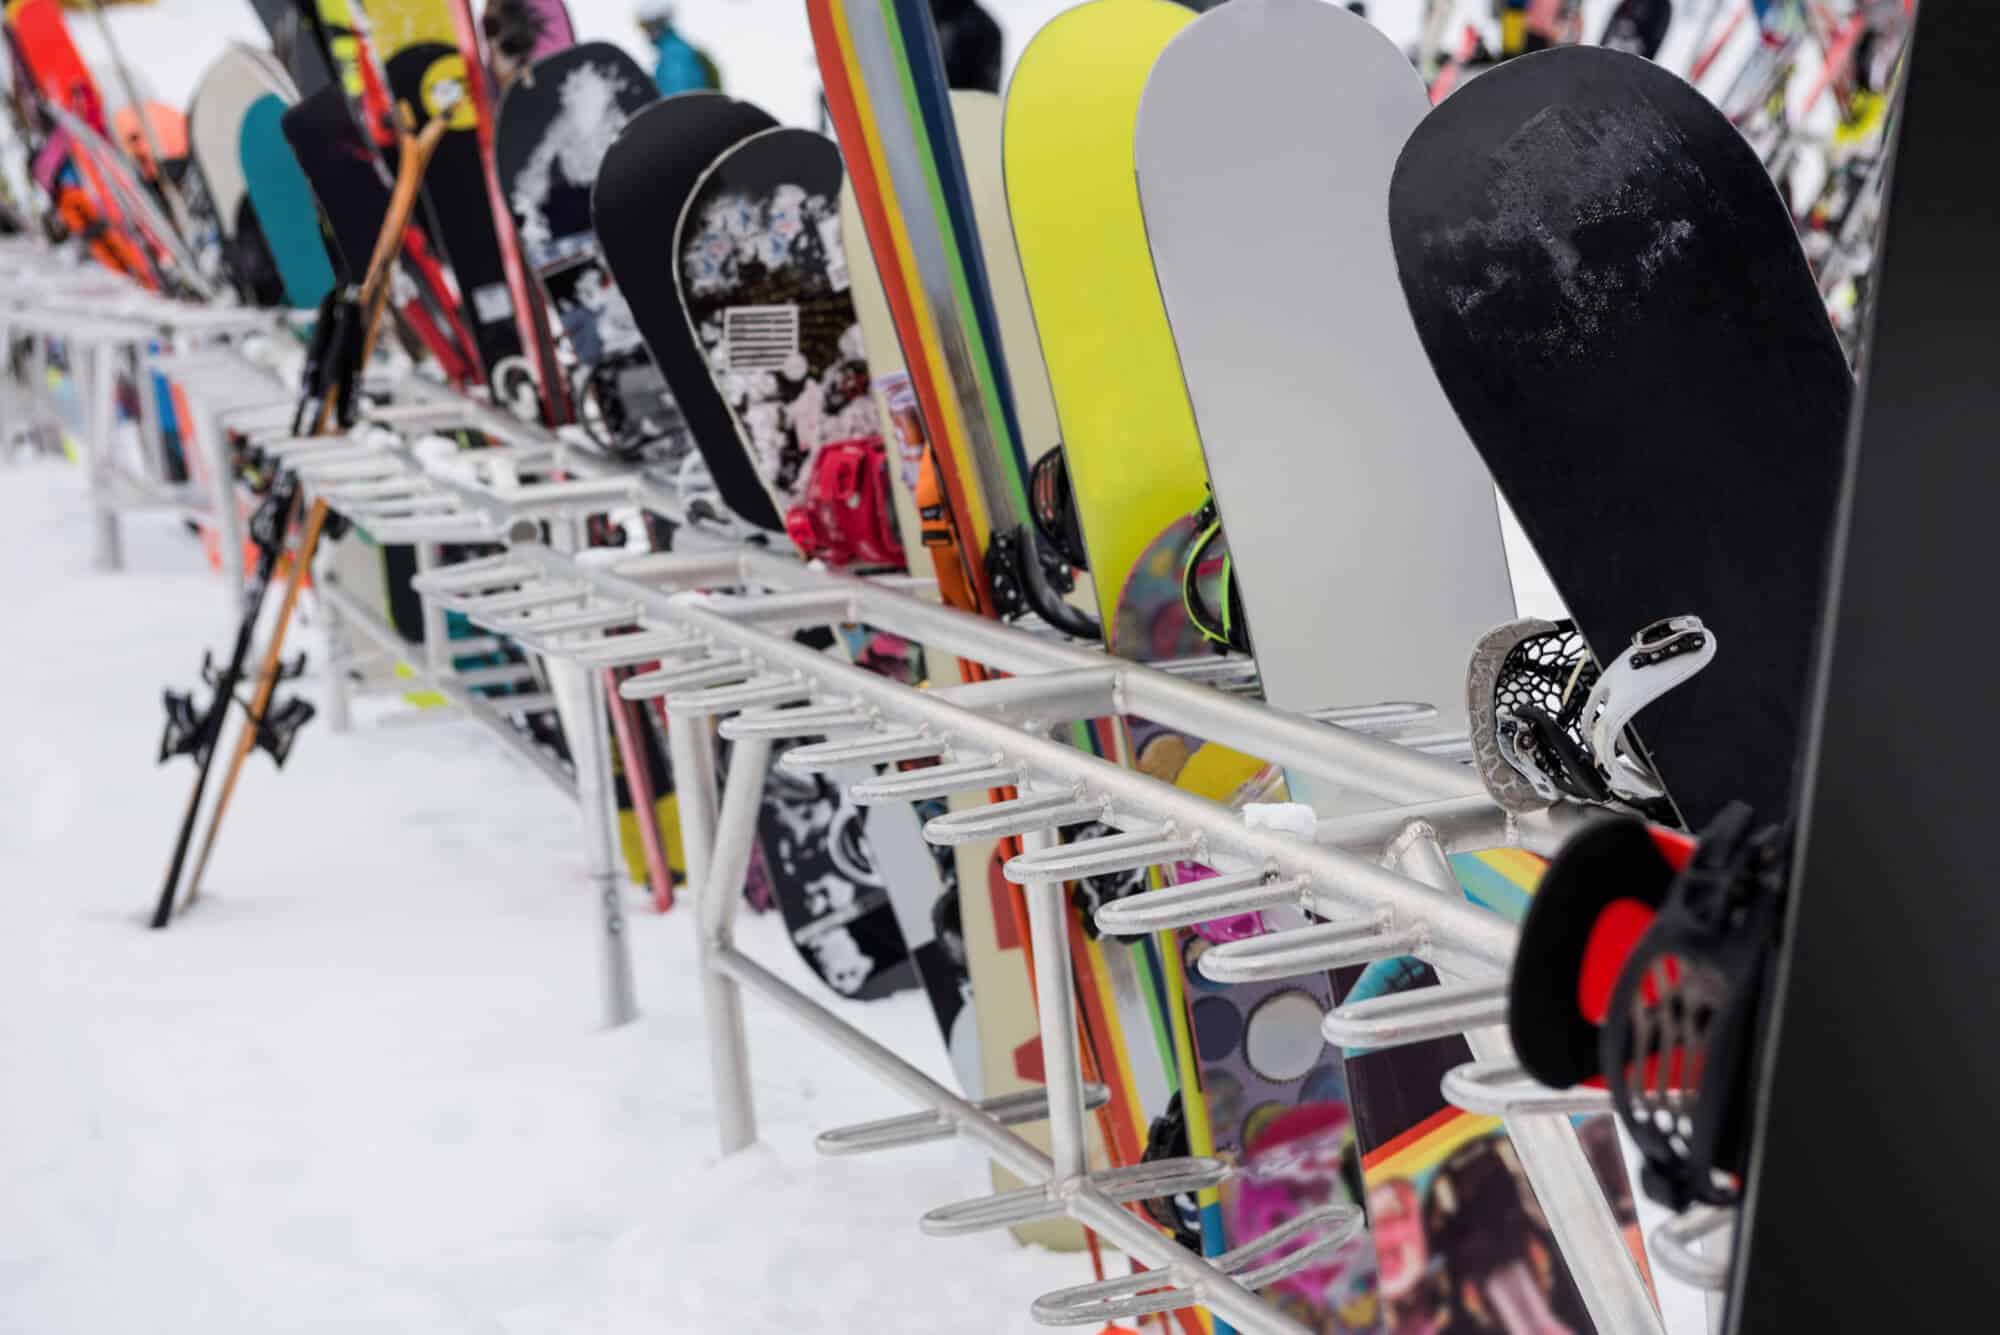 Skis and snowboards -Maximum Daily Ski/Snowboarder Capacity